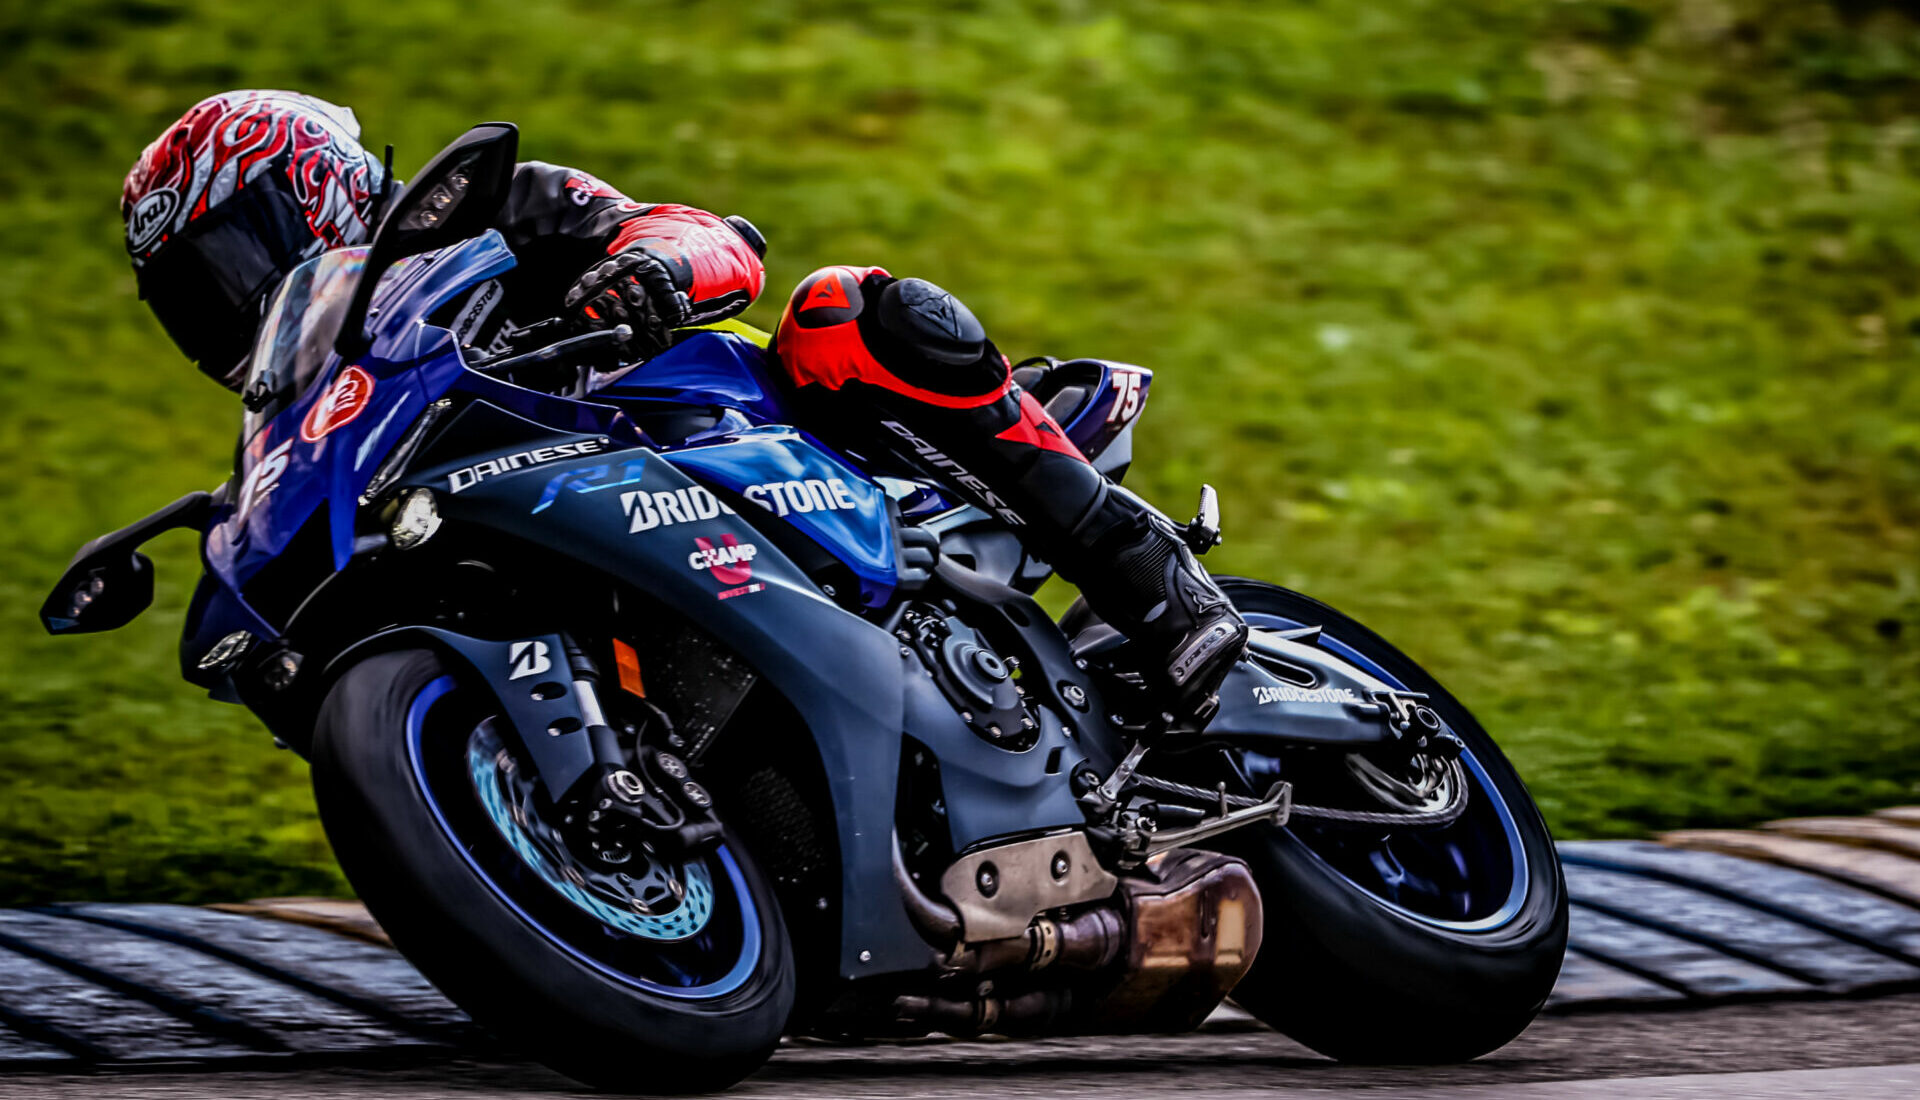 Bridgestone has been named the official tire of the Yamaha Champions Riding School. Photo courtesy Bridgestone.